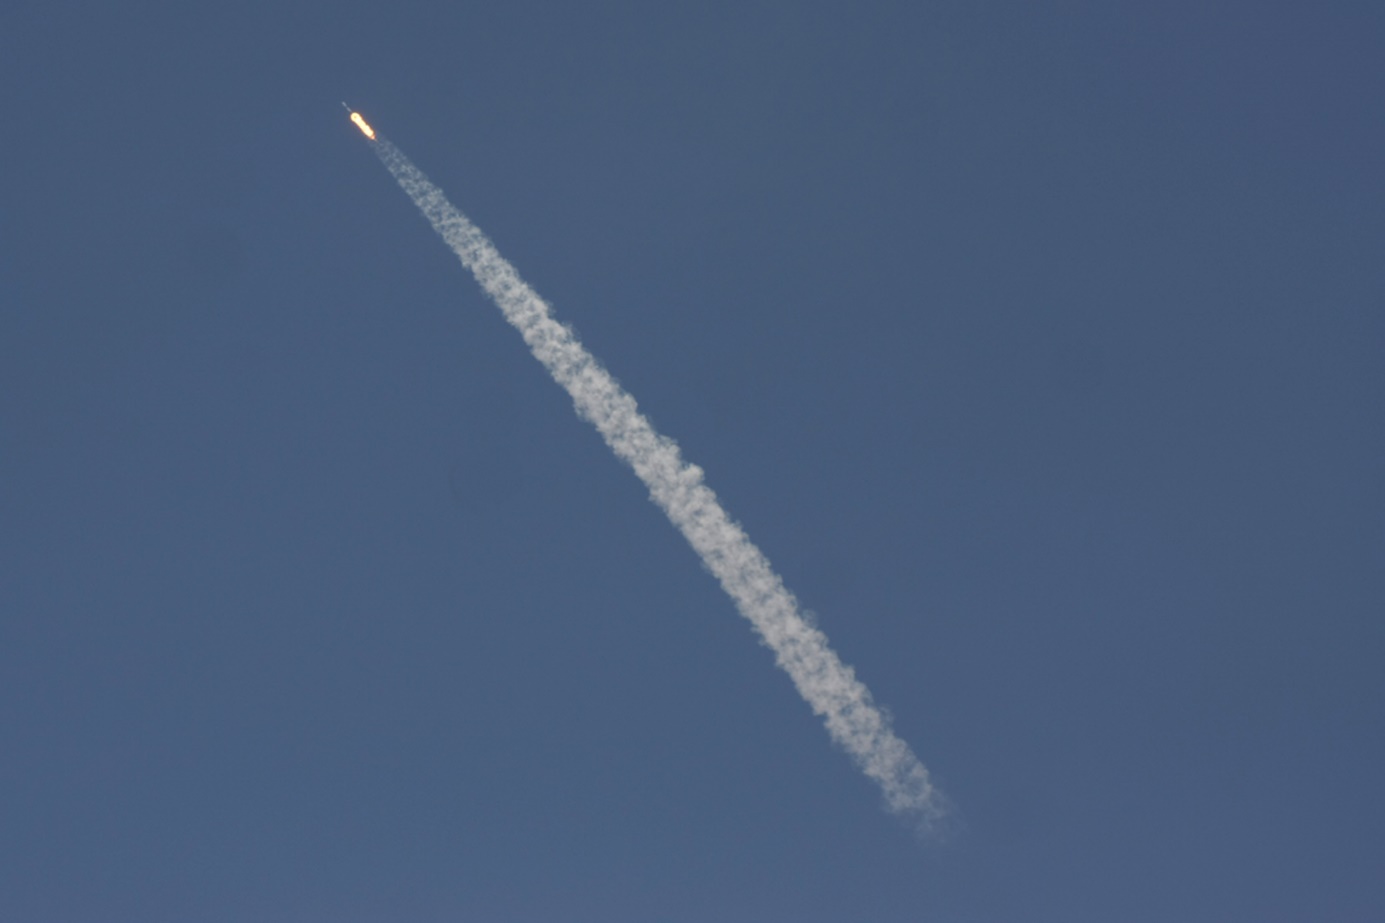 Falcon 9 Starlink 4-19 Downrange, Photo Courtesy Carleton Bailie, Spaceline